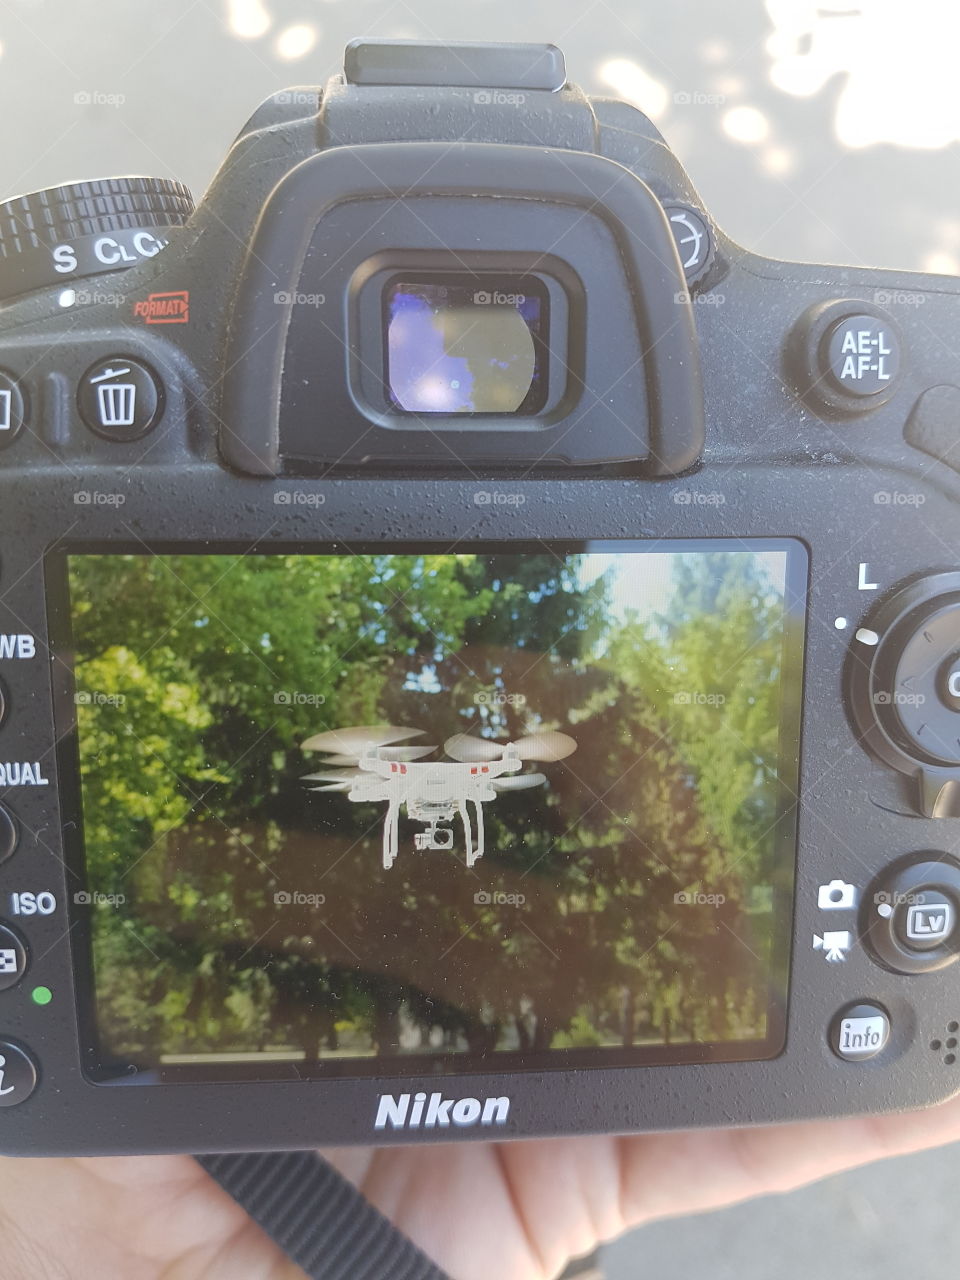 dron flying captured on nikon